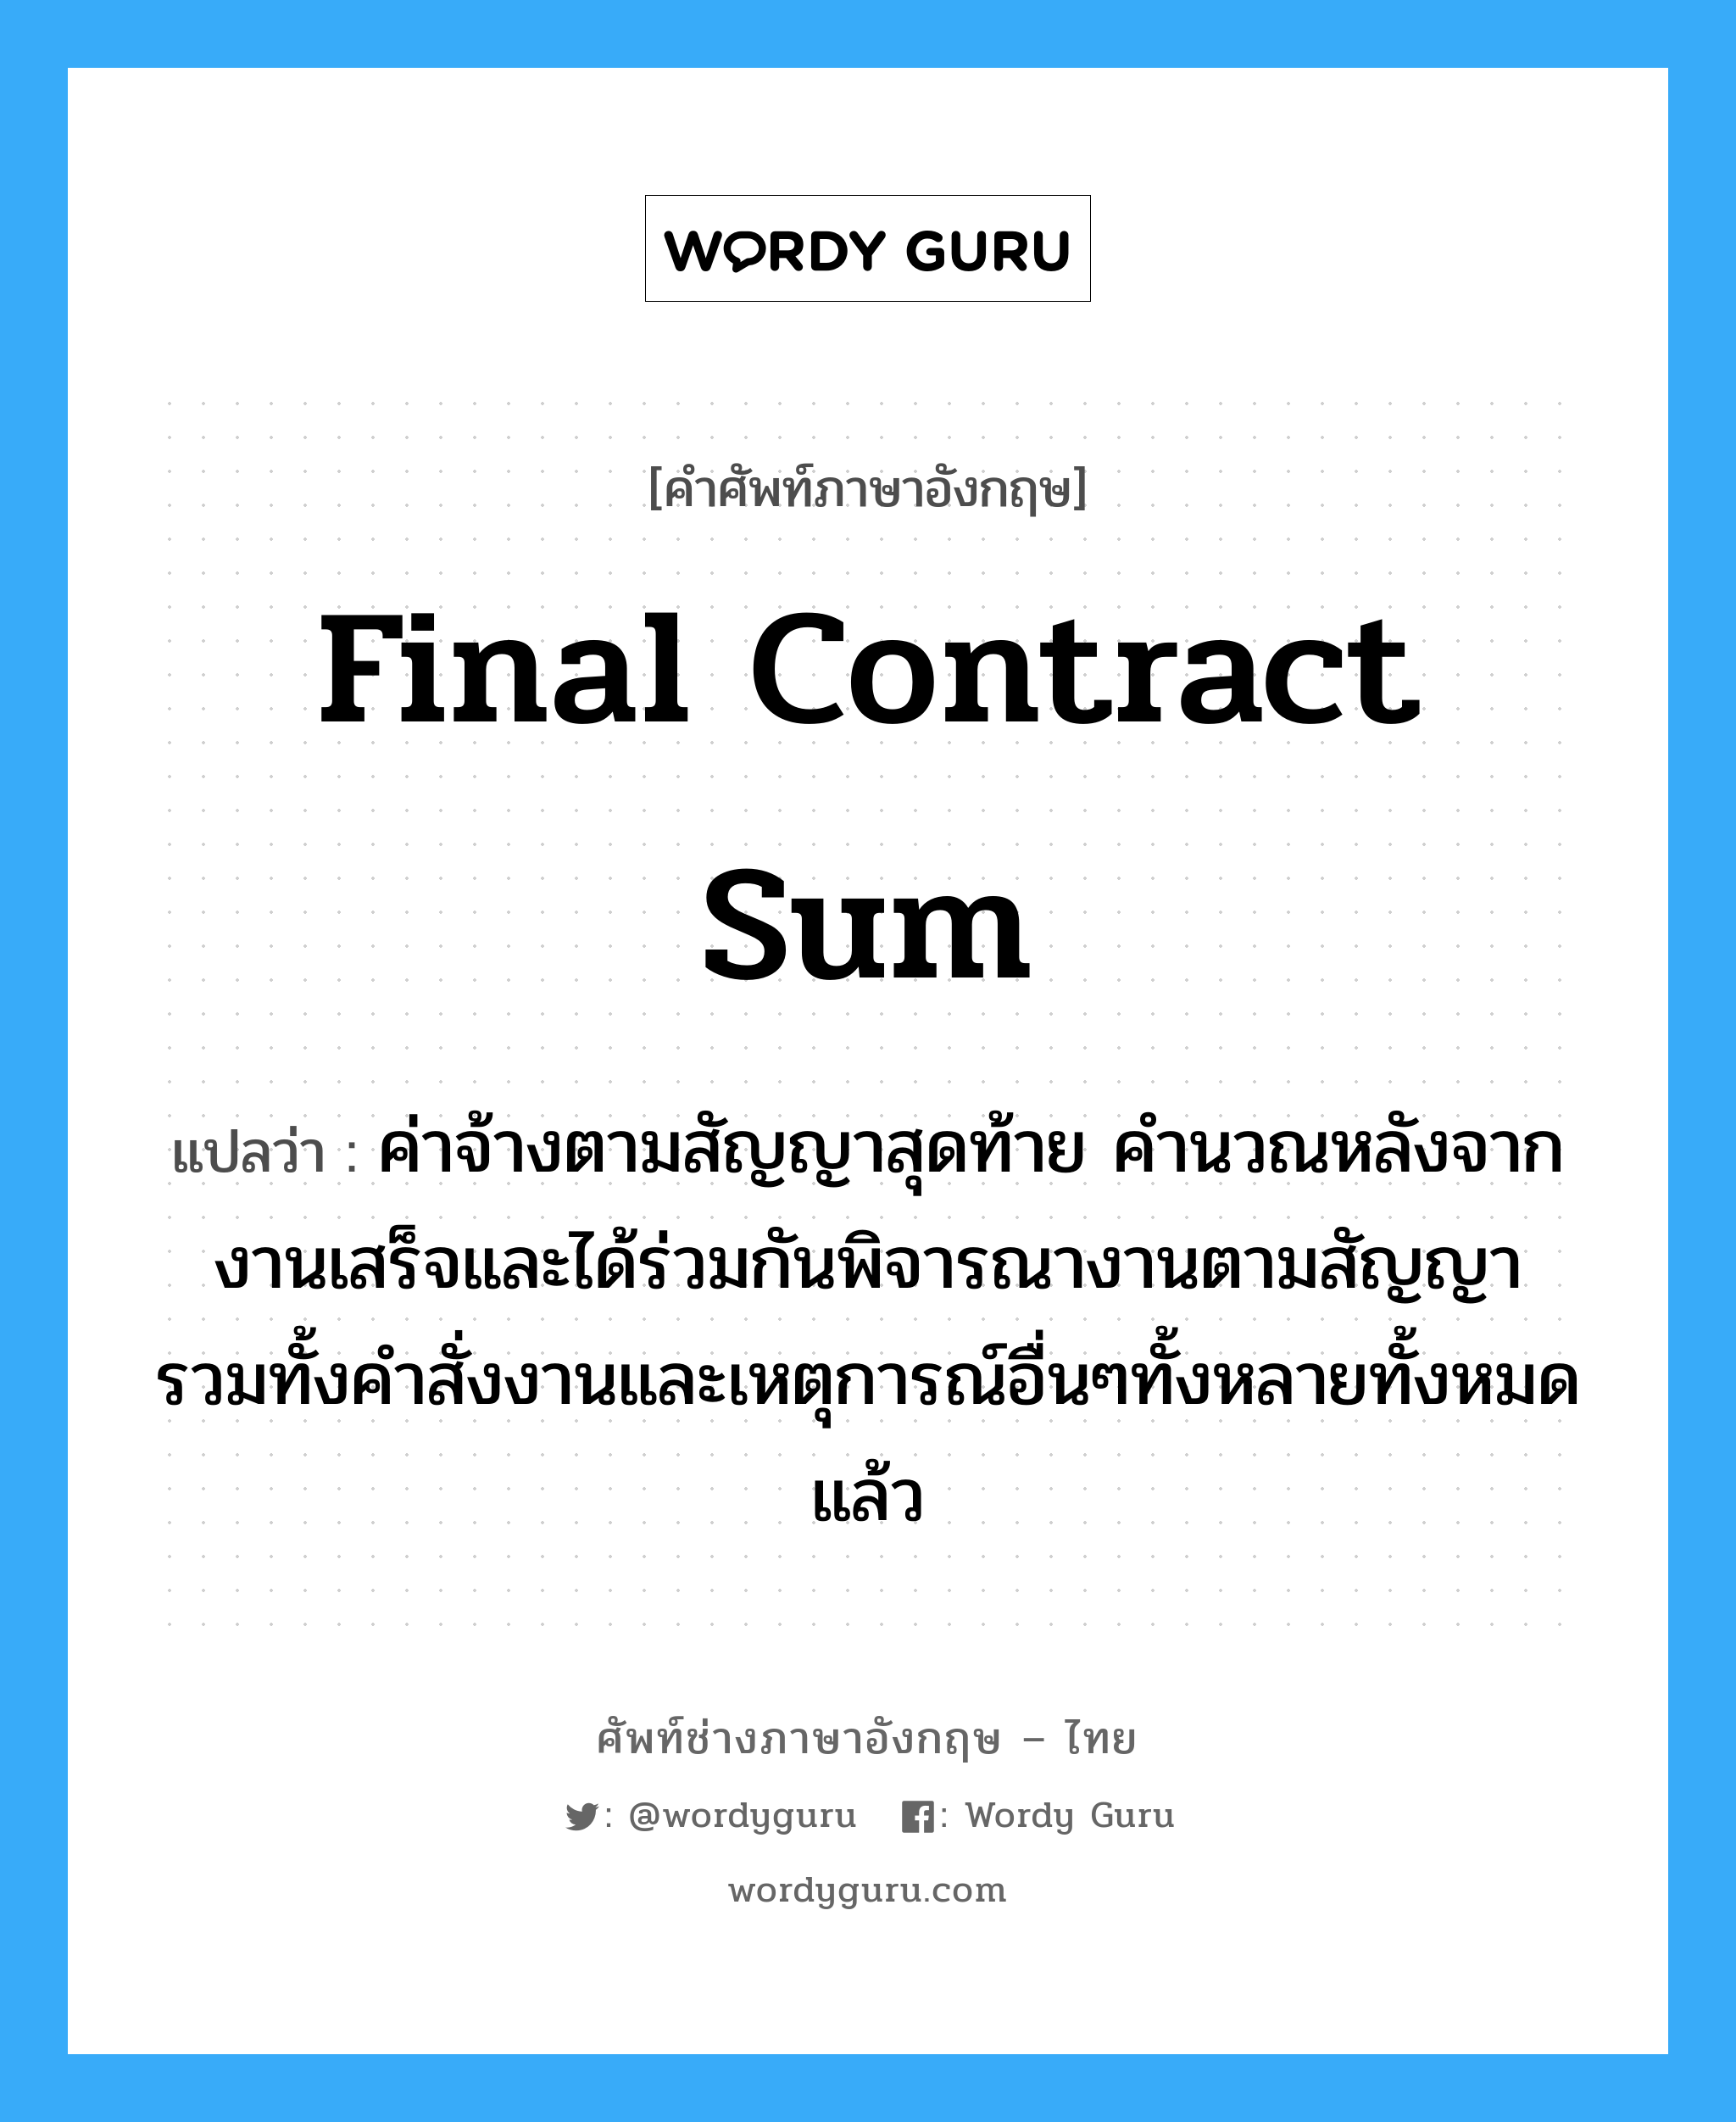 Final Contract Sum แปลว่า?, คำศัพท์ช่างภาษาอังกฤษ - ไทย Final Contract Sum คำศัพท์ภาษาอังกฤษ Final Contract Sum แปลว่า ค่าจ้างตามสัญญาสุดท้าย คำนวณหลังจากงานเสร็จและได้ร่วมกันพิจารณางานตามสัญญา รวมทั้งคำสั่งงานและเหตุการณ์อื่นๆทั้งหลายทั้งหมดแล้ว